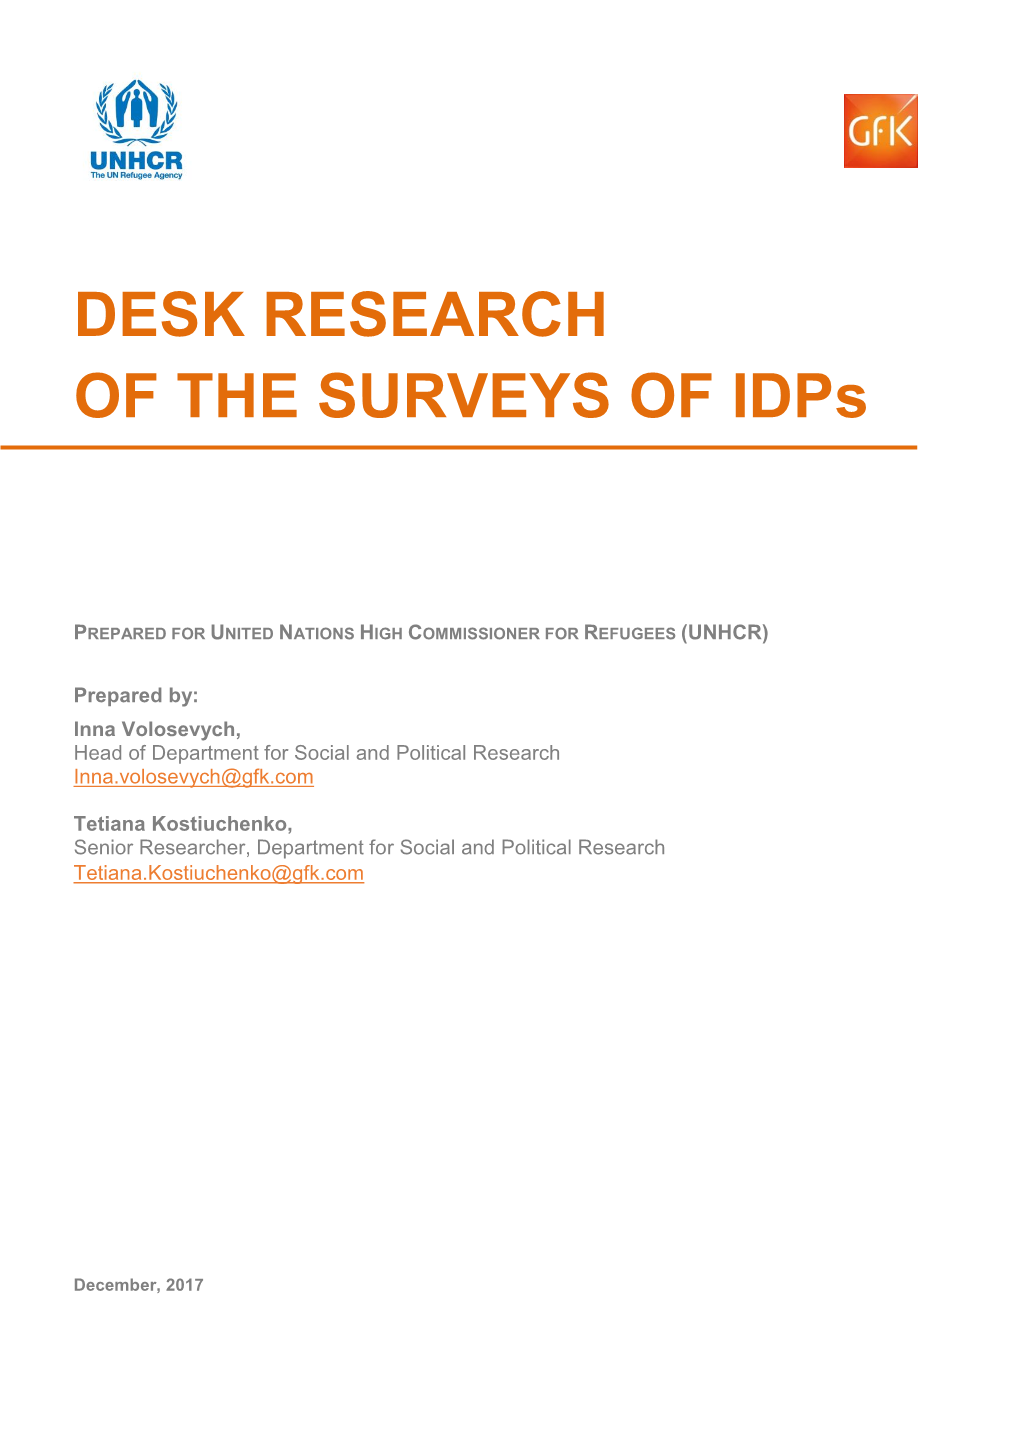 UNHCR/GFK Desk Research of the Surveys of Idps